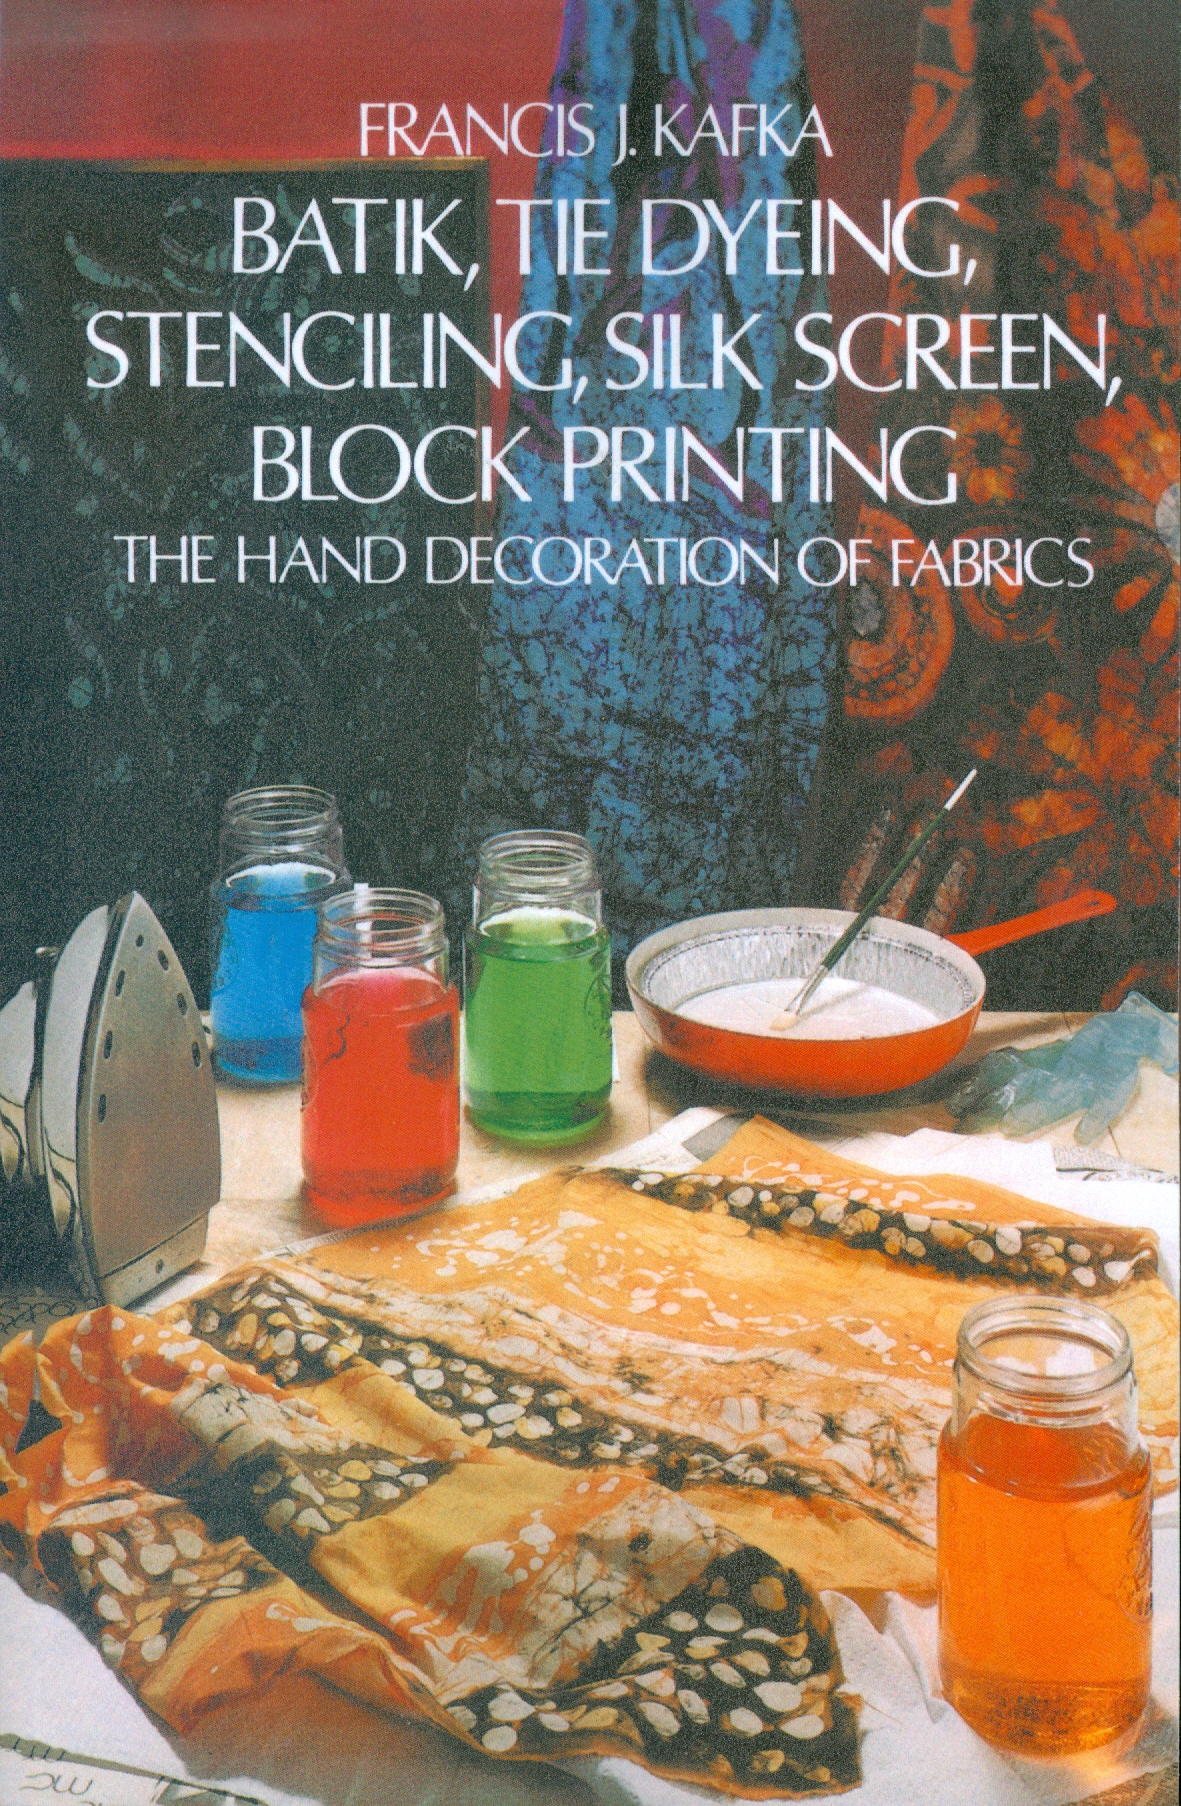 The Hand Decoration of Fabrics0001.jpg